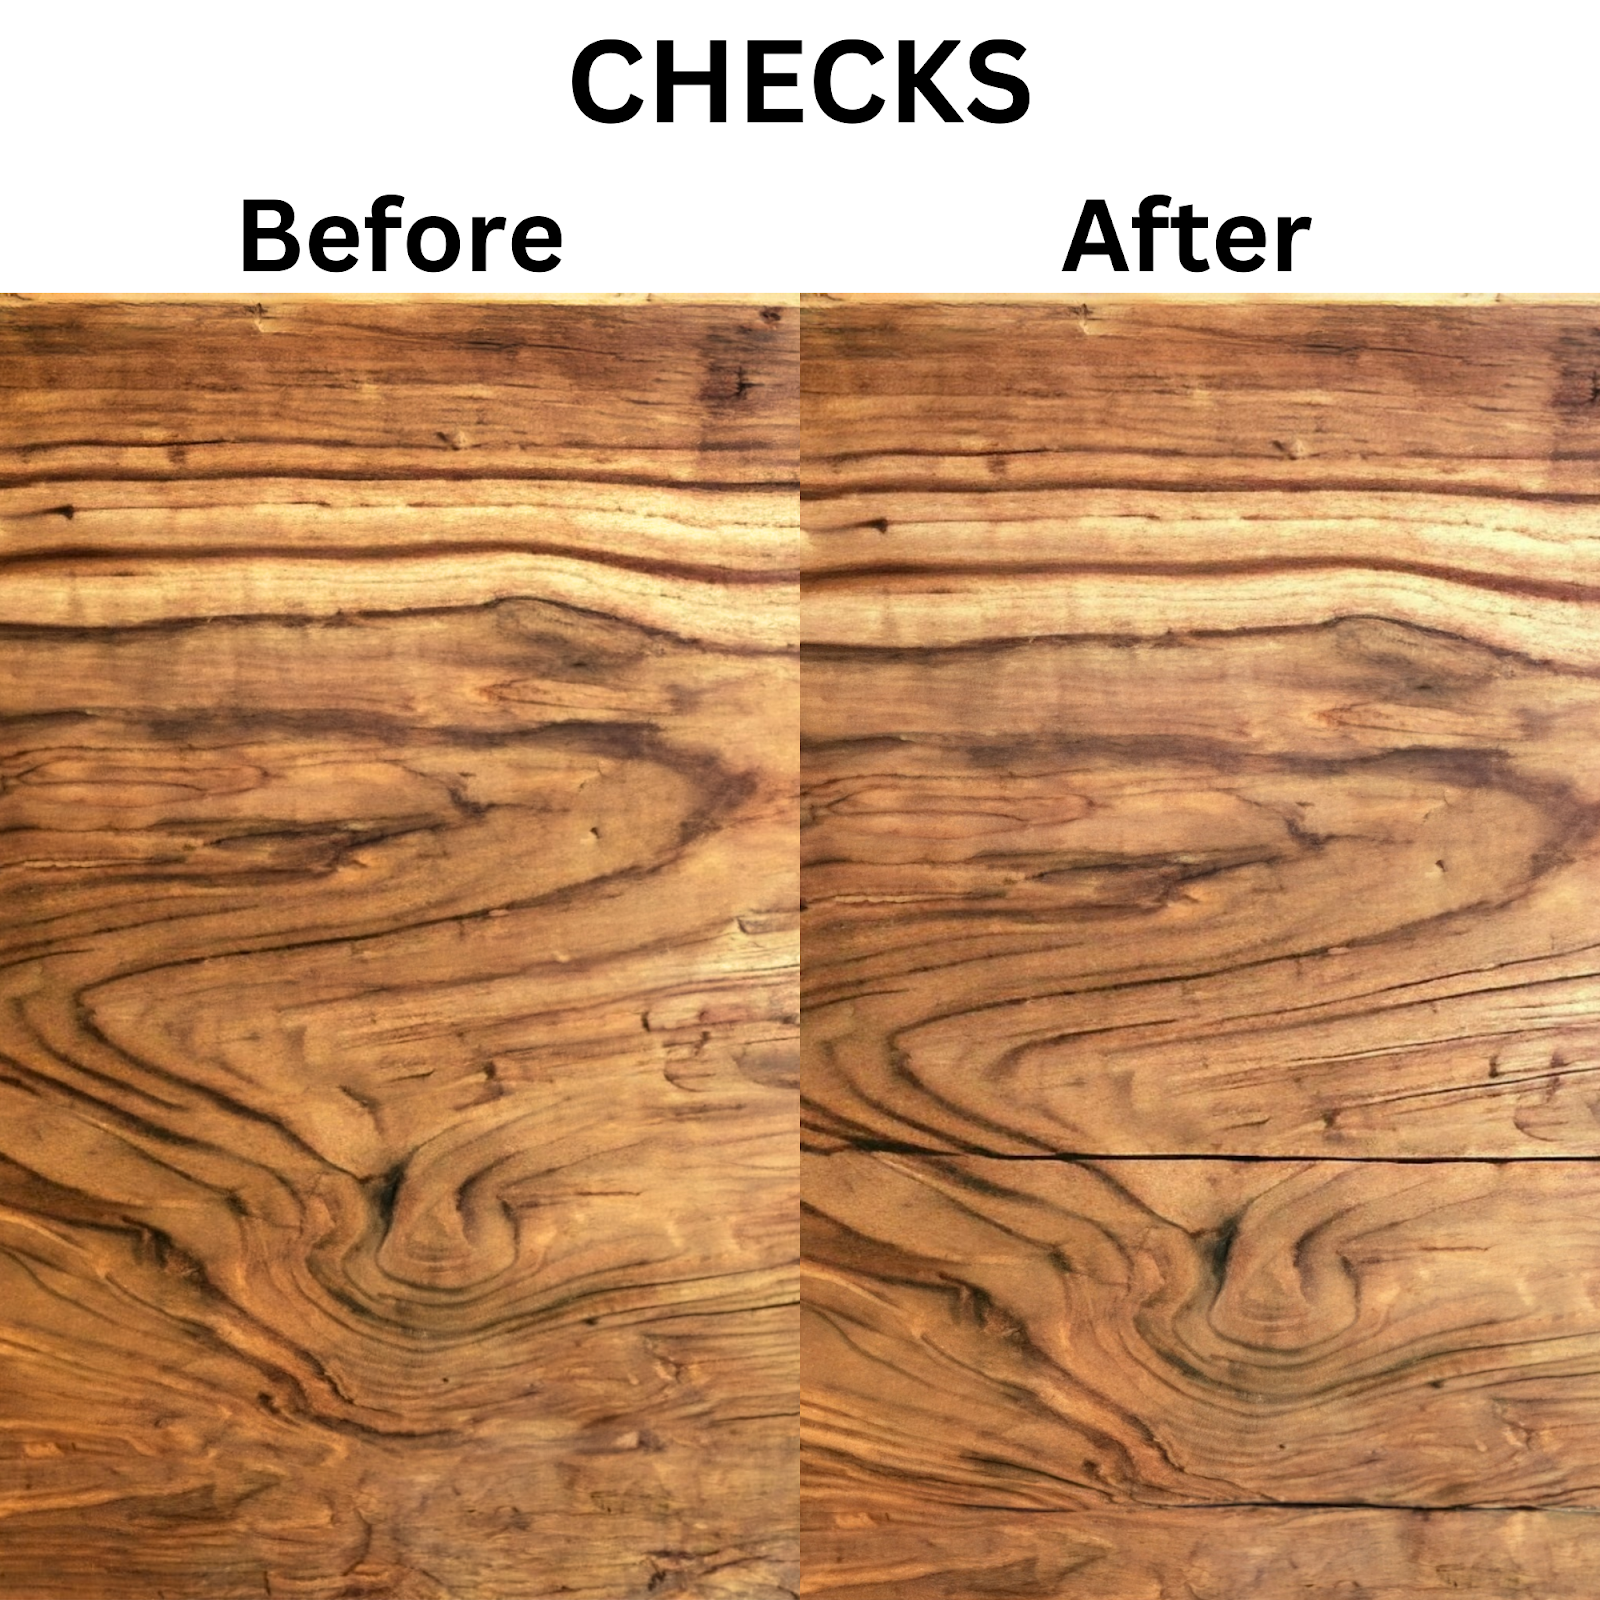 Wood checking 